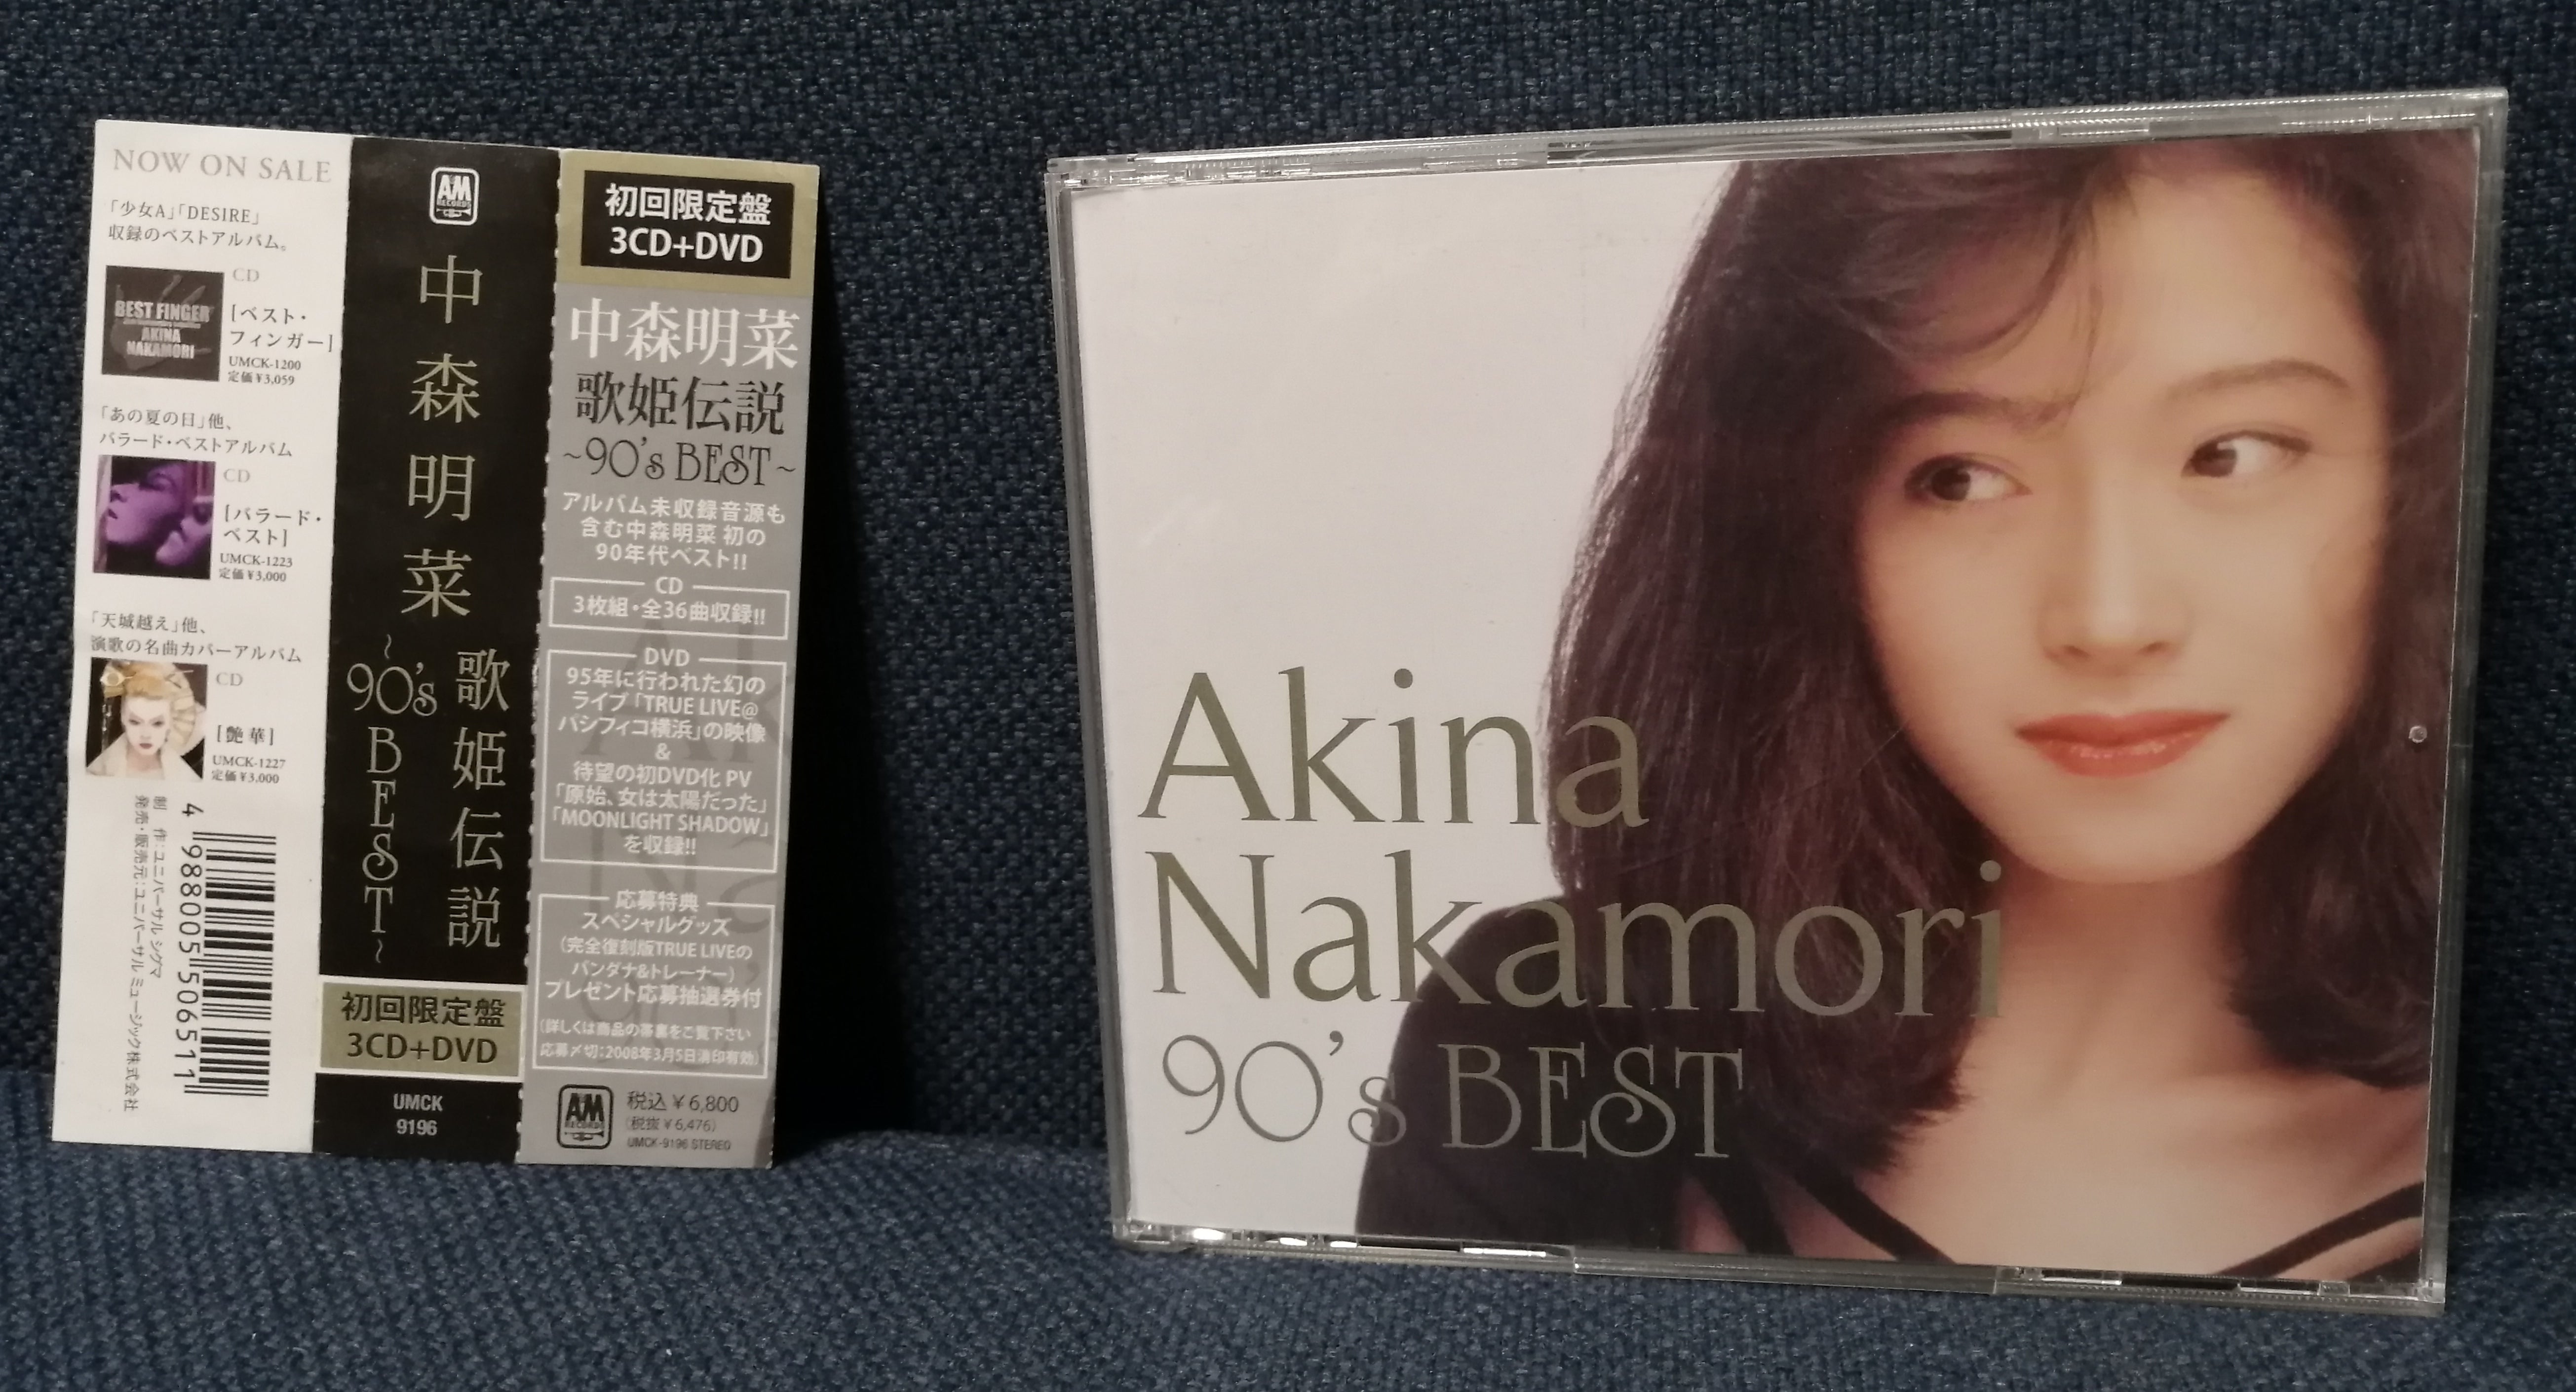 Akina Nakamori ‎中森明菜 – Utahime Densetsu 歌姫伝説 〜90's Best〜 3CD+DVD  Compilation Album